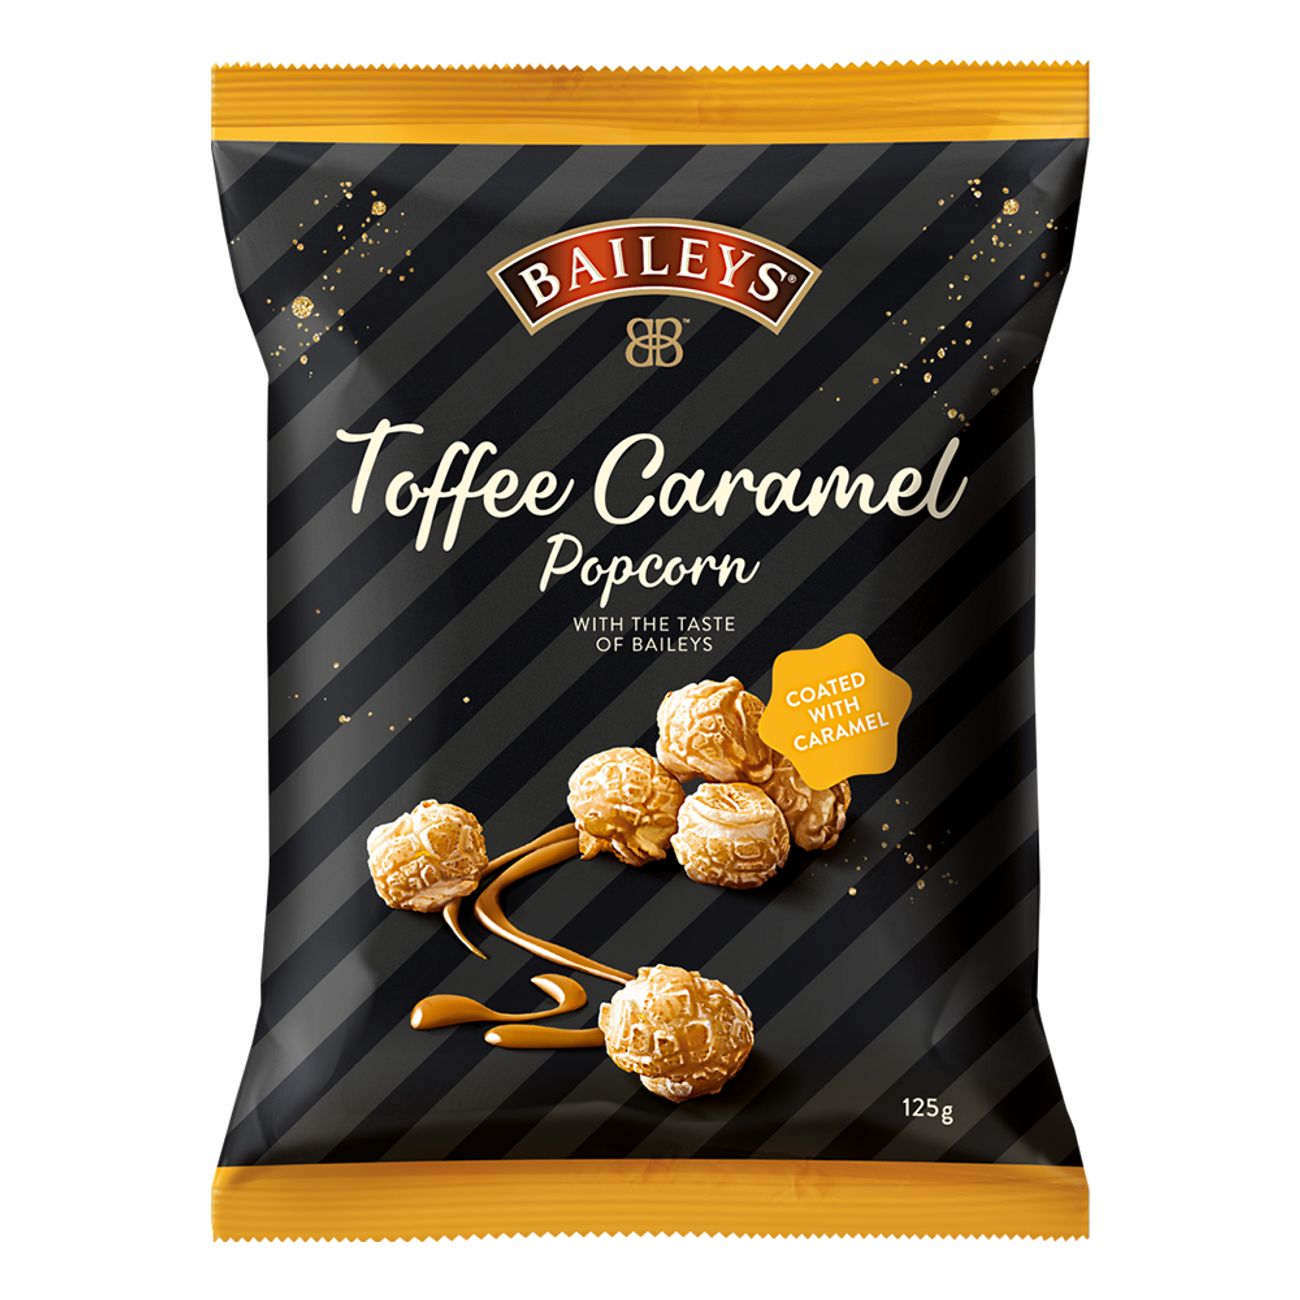 baileys-popcorn-toffee-caramel-101258-1